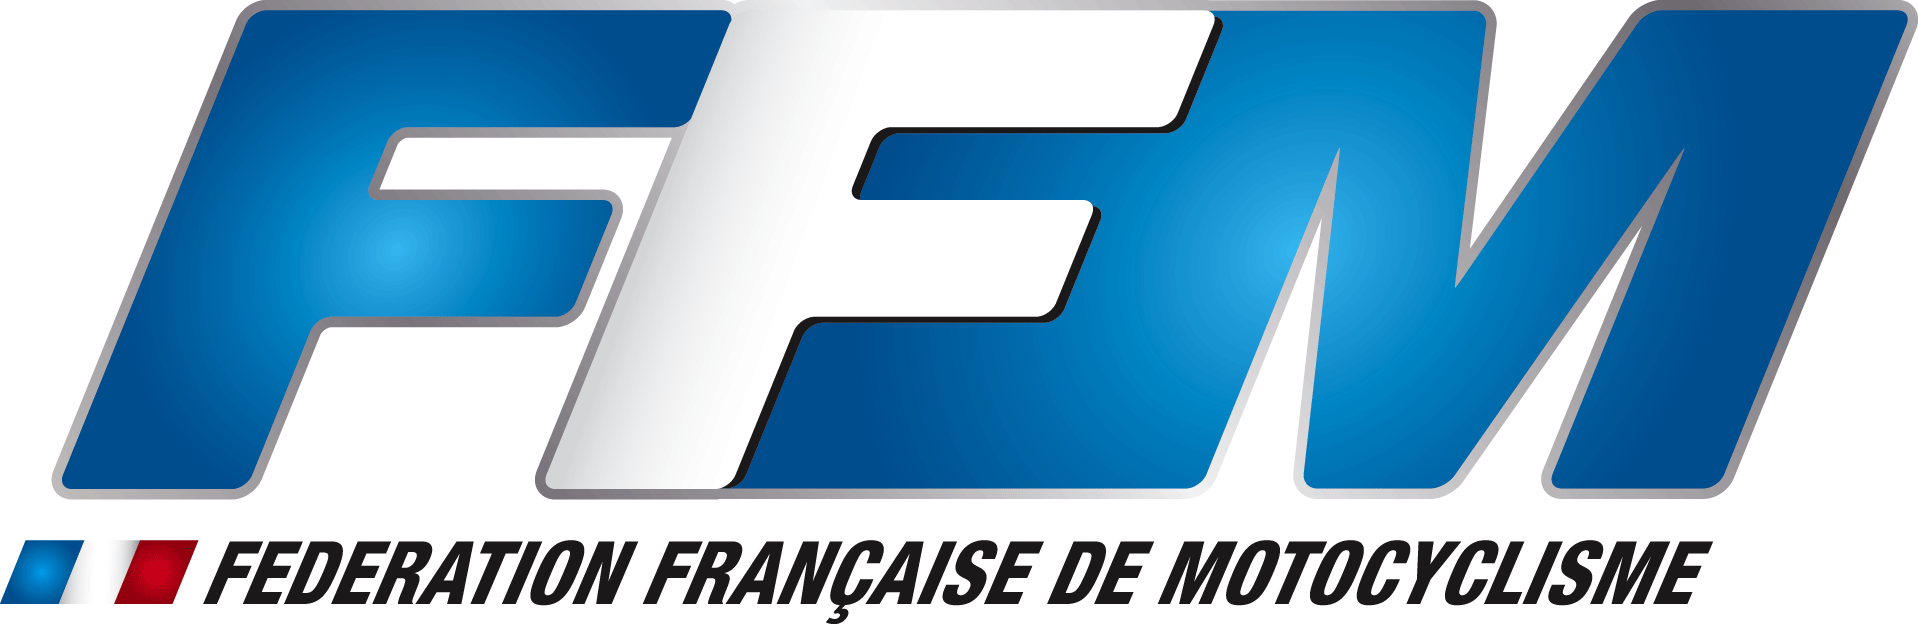 ffm_logo.png